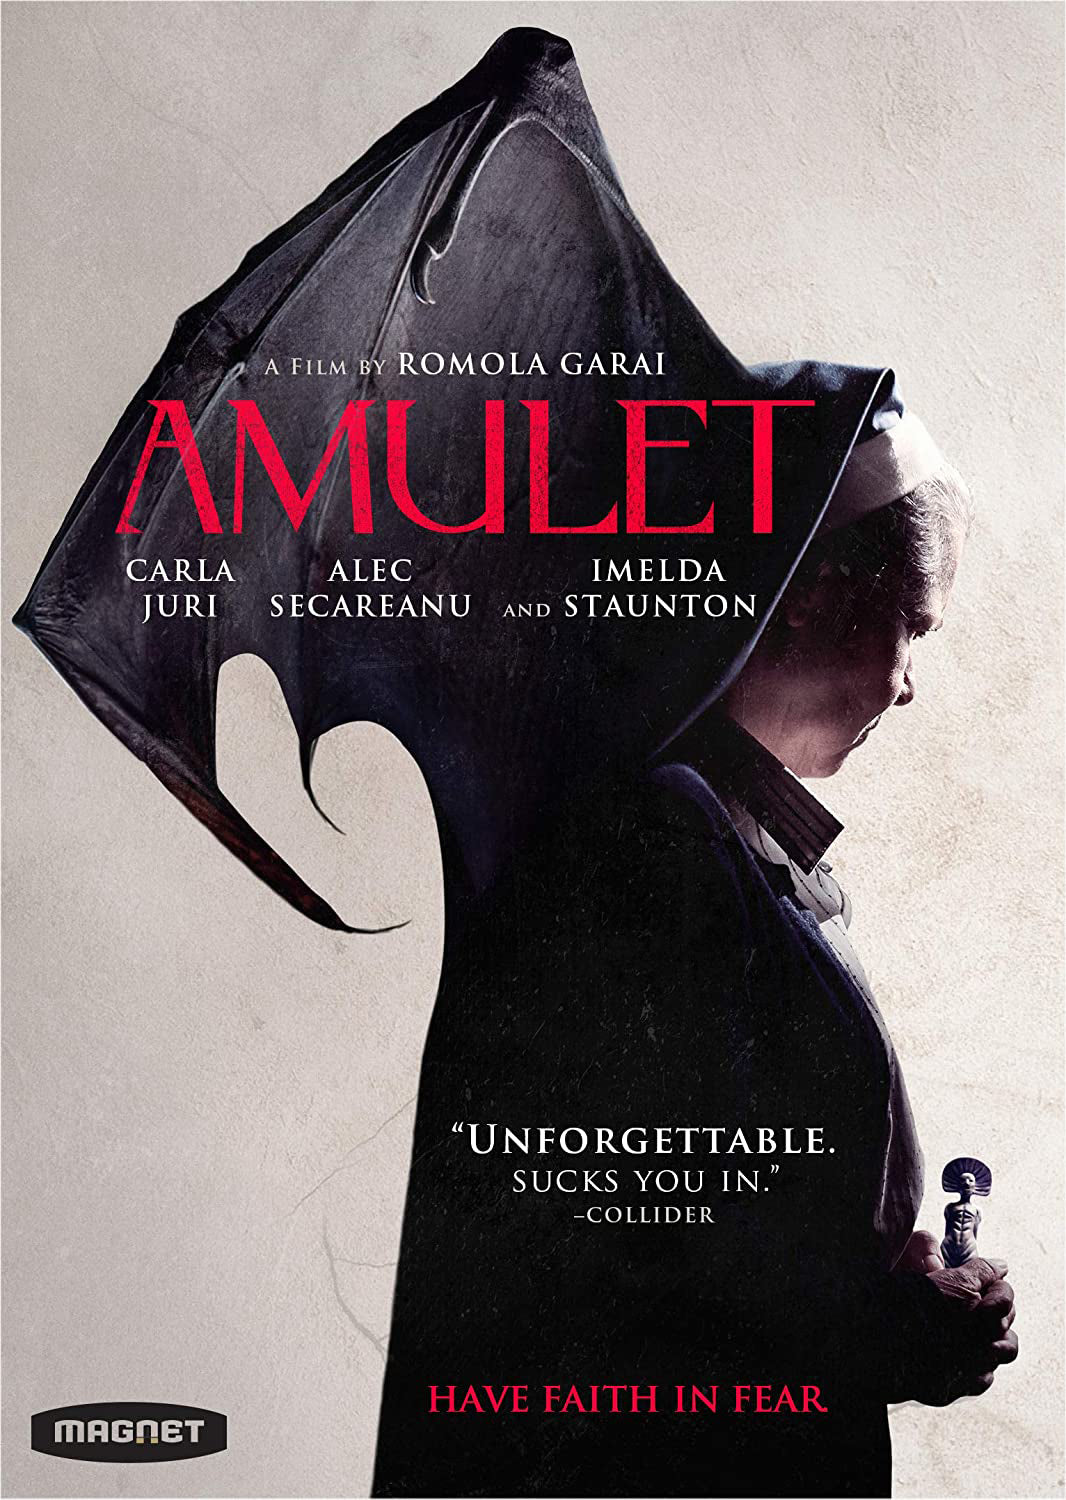 Amulet cover art